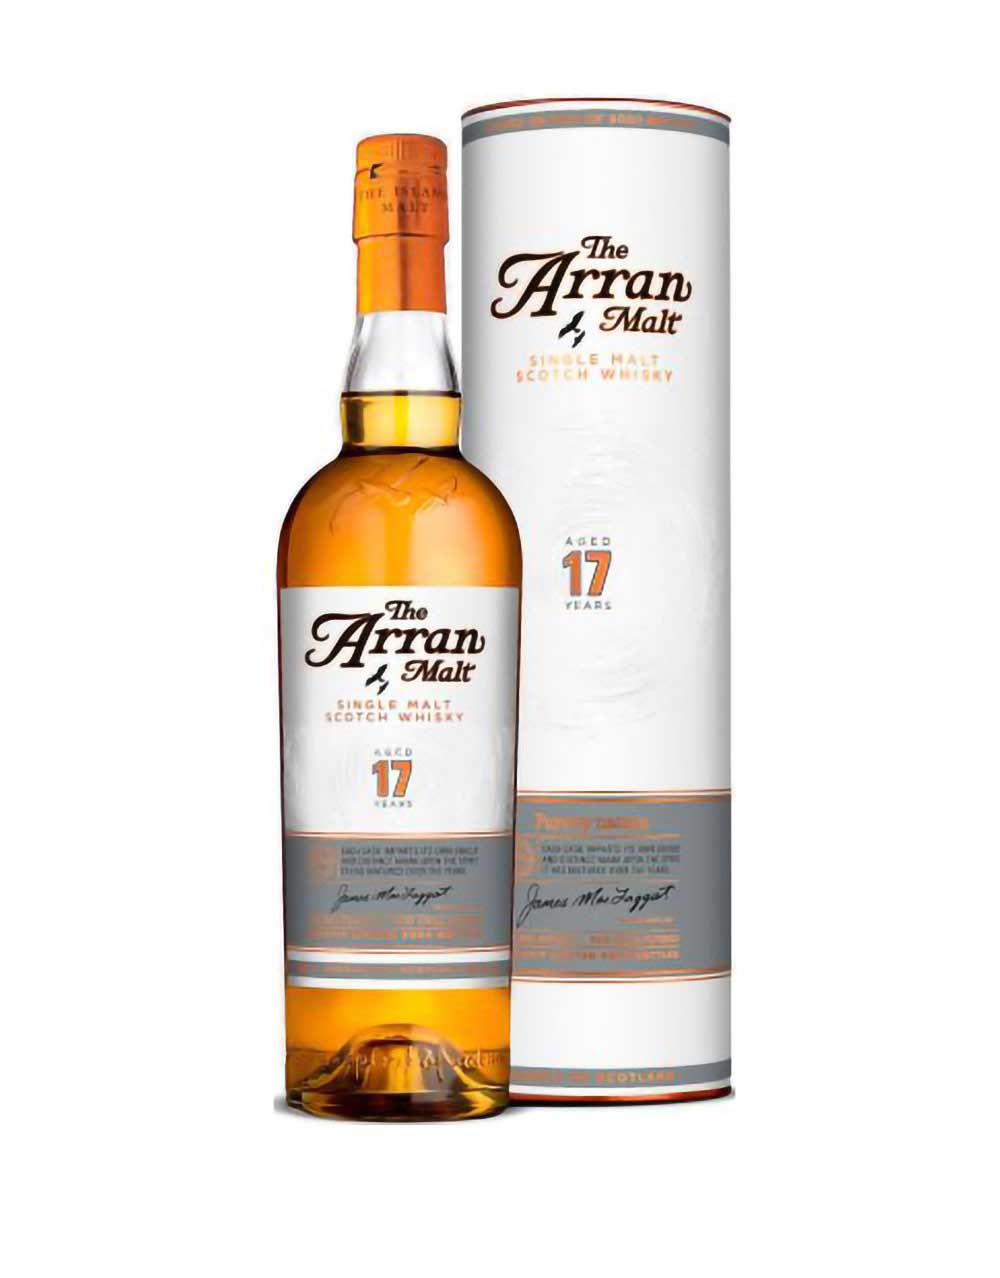 The Arran 17 Year Old Single Malt Scotch Whisky